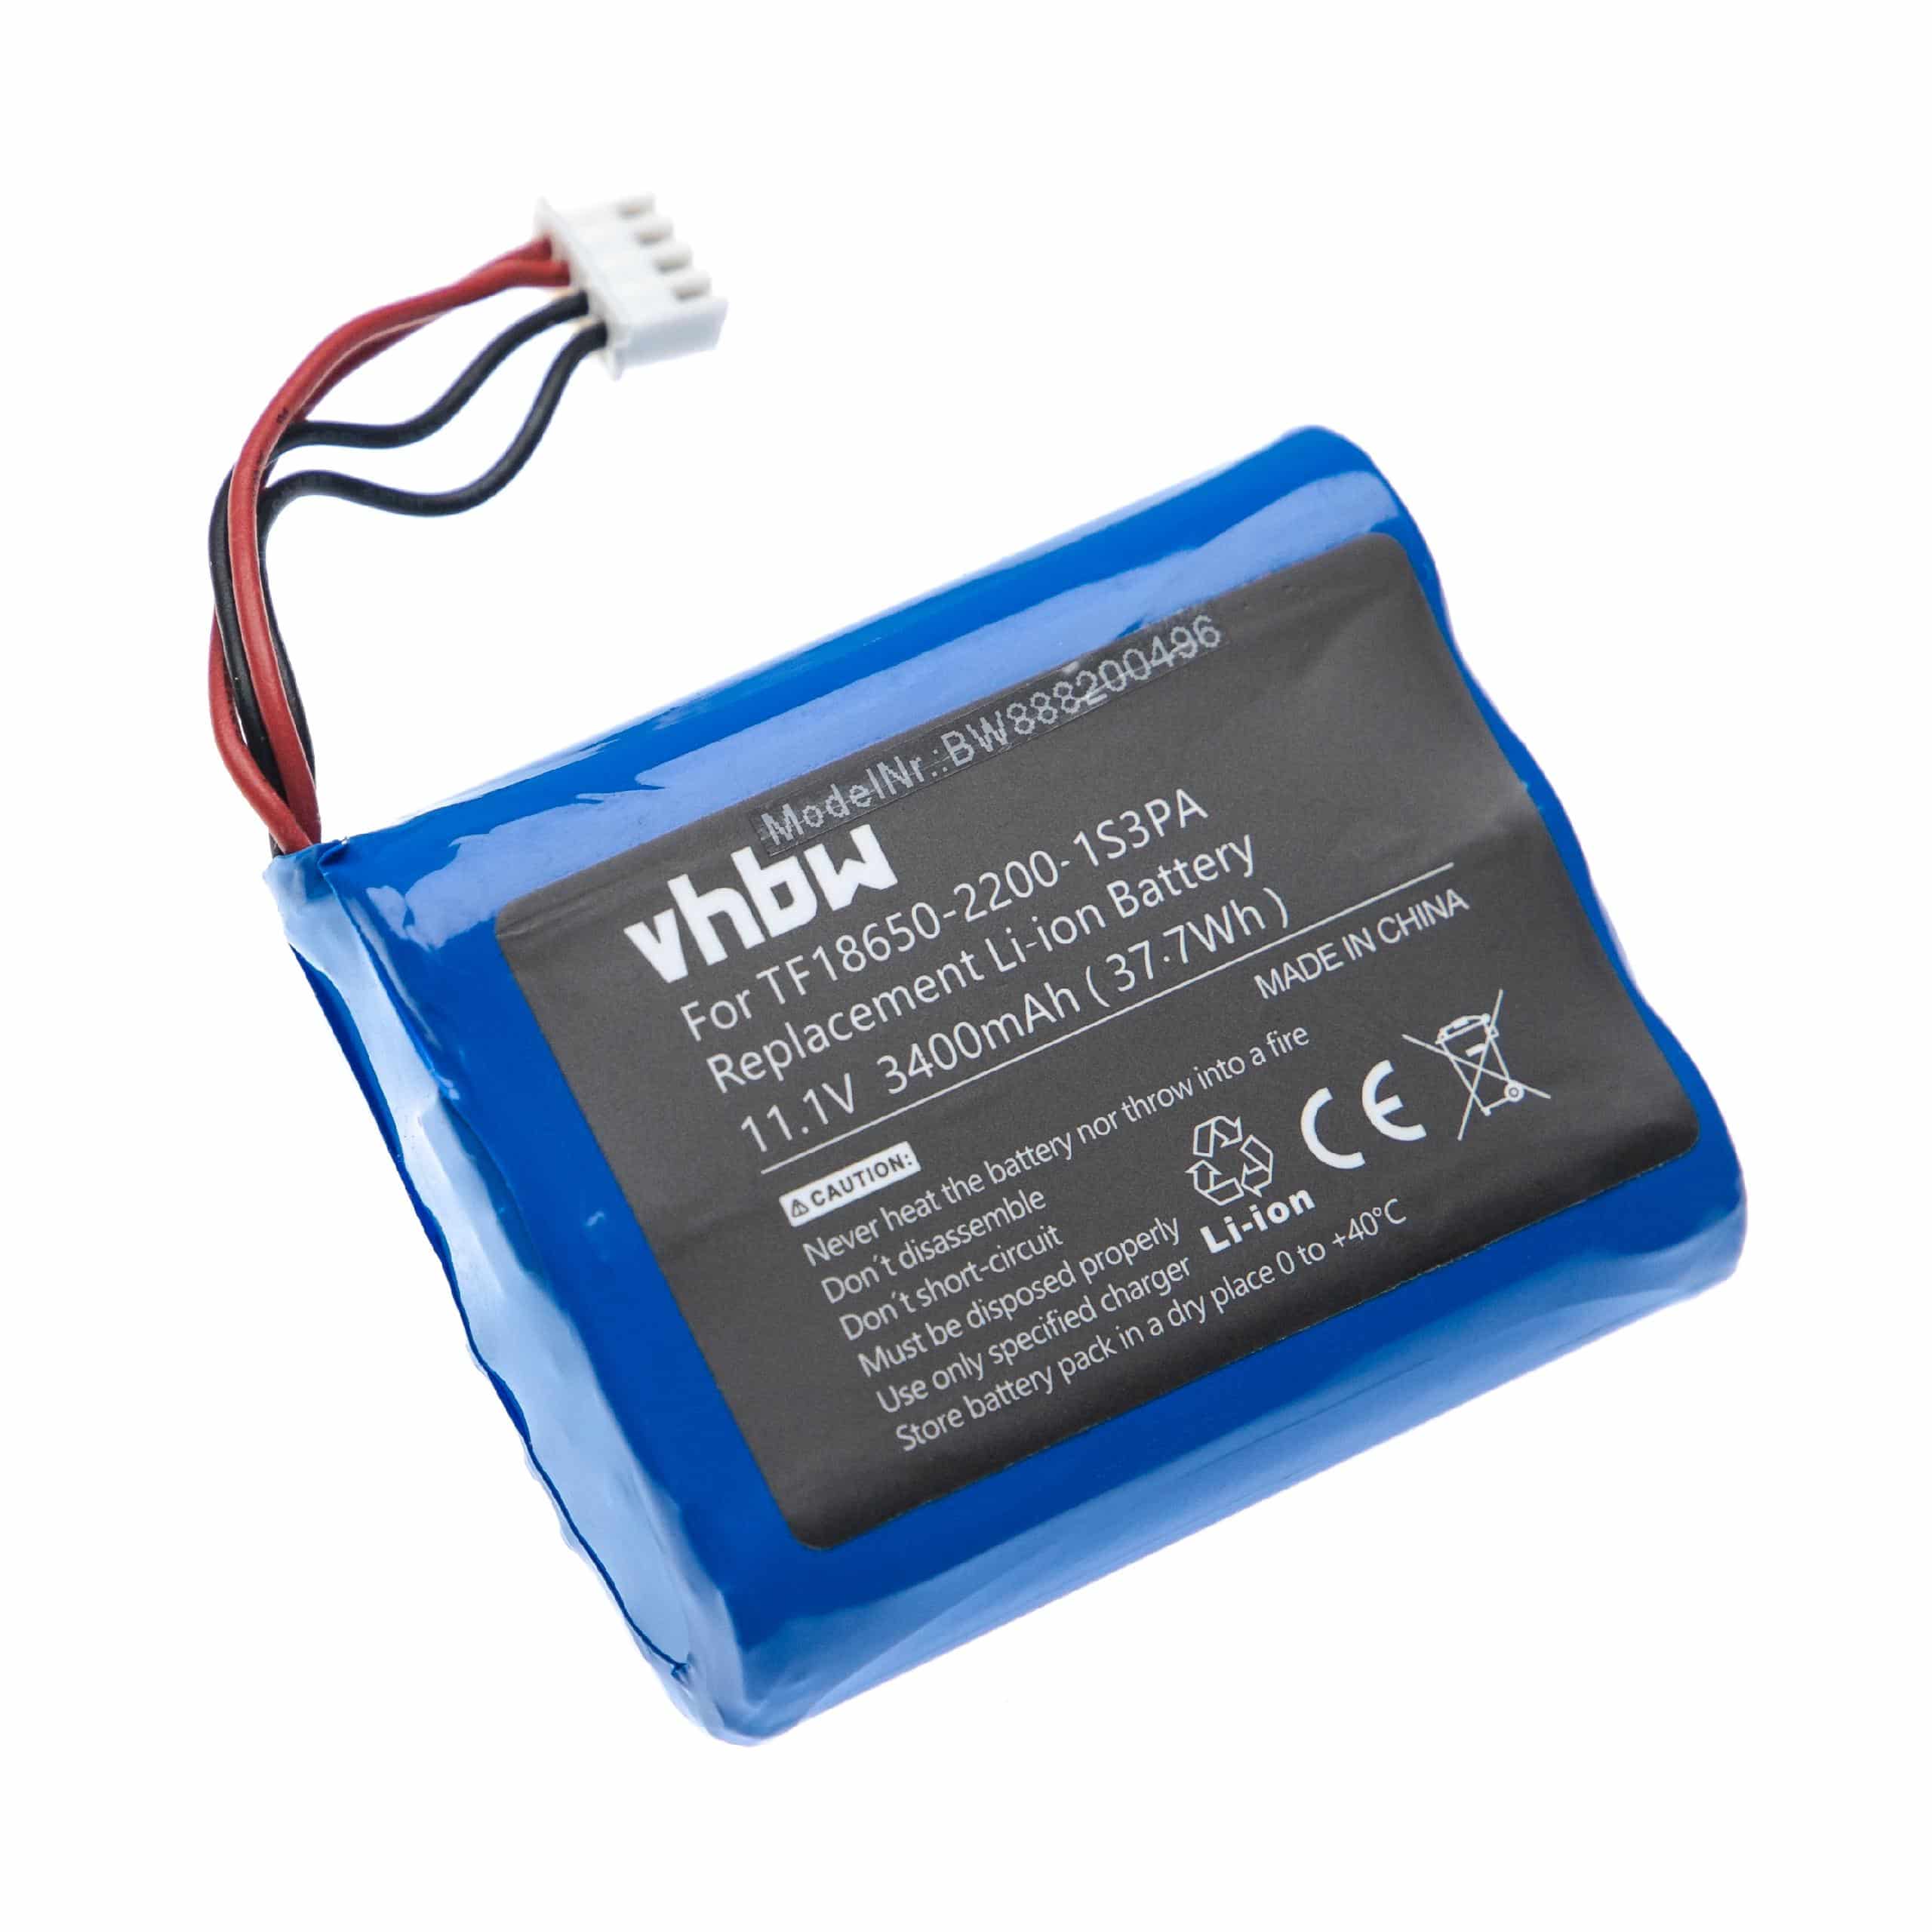  Battery replaces Marshall TF18650-2200-1S3PA for MarshallLoudspeaker - Li-Ion 3400 mAh